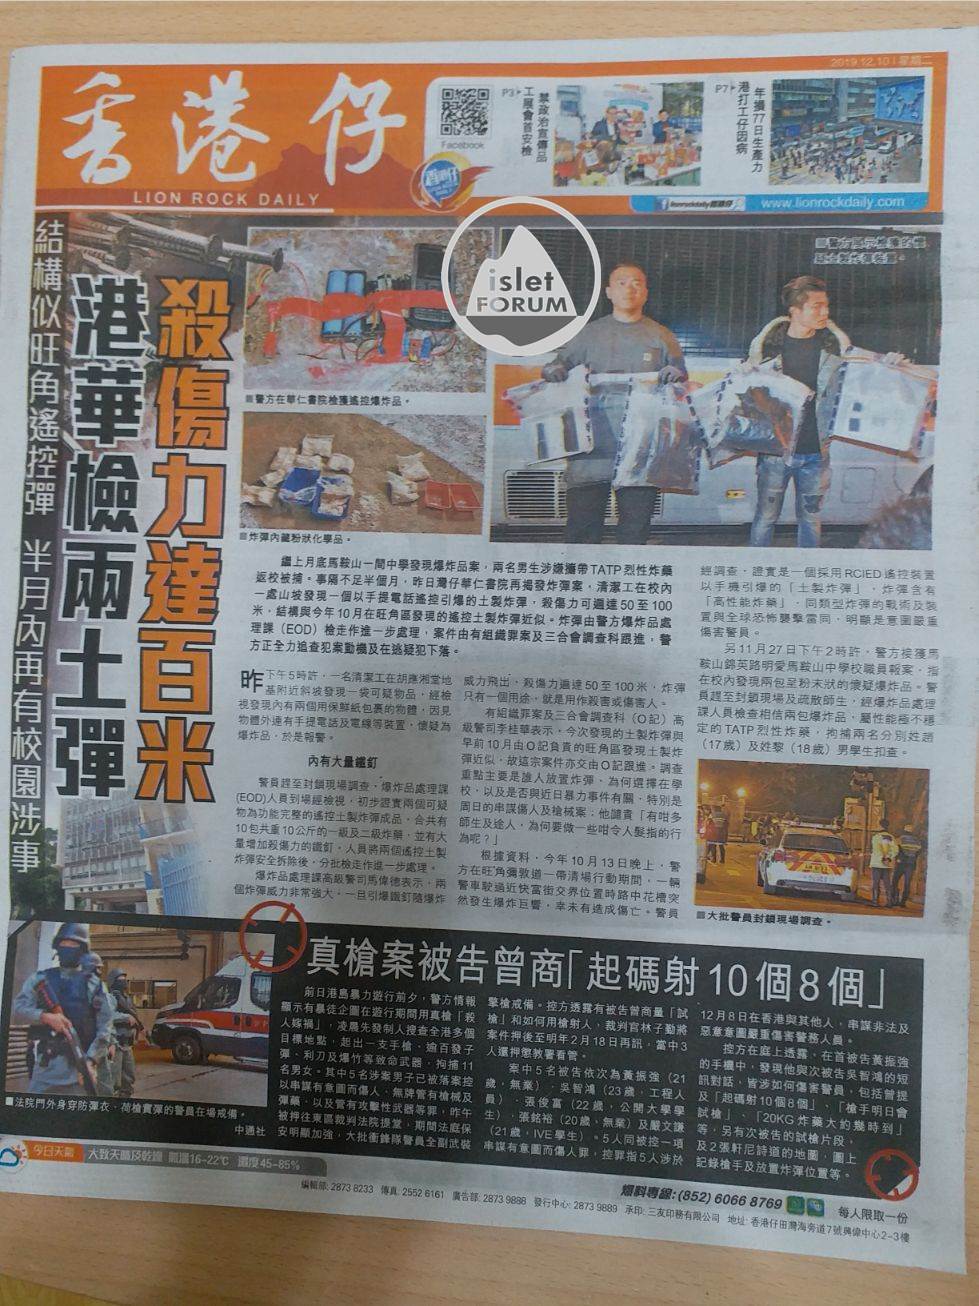 香港仔報紙Lion Rock Daily.jpg